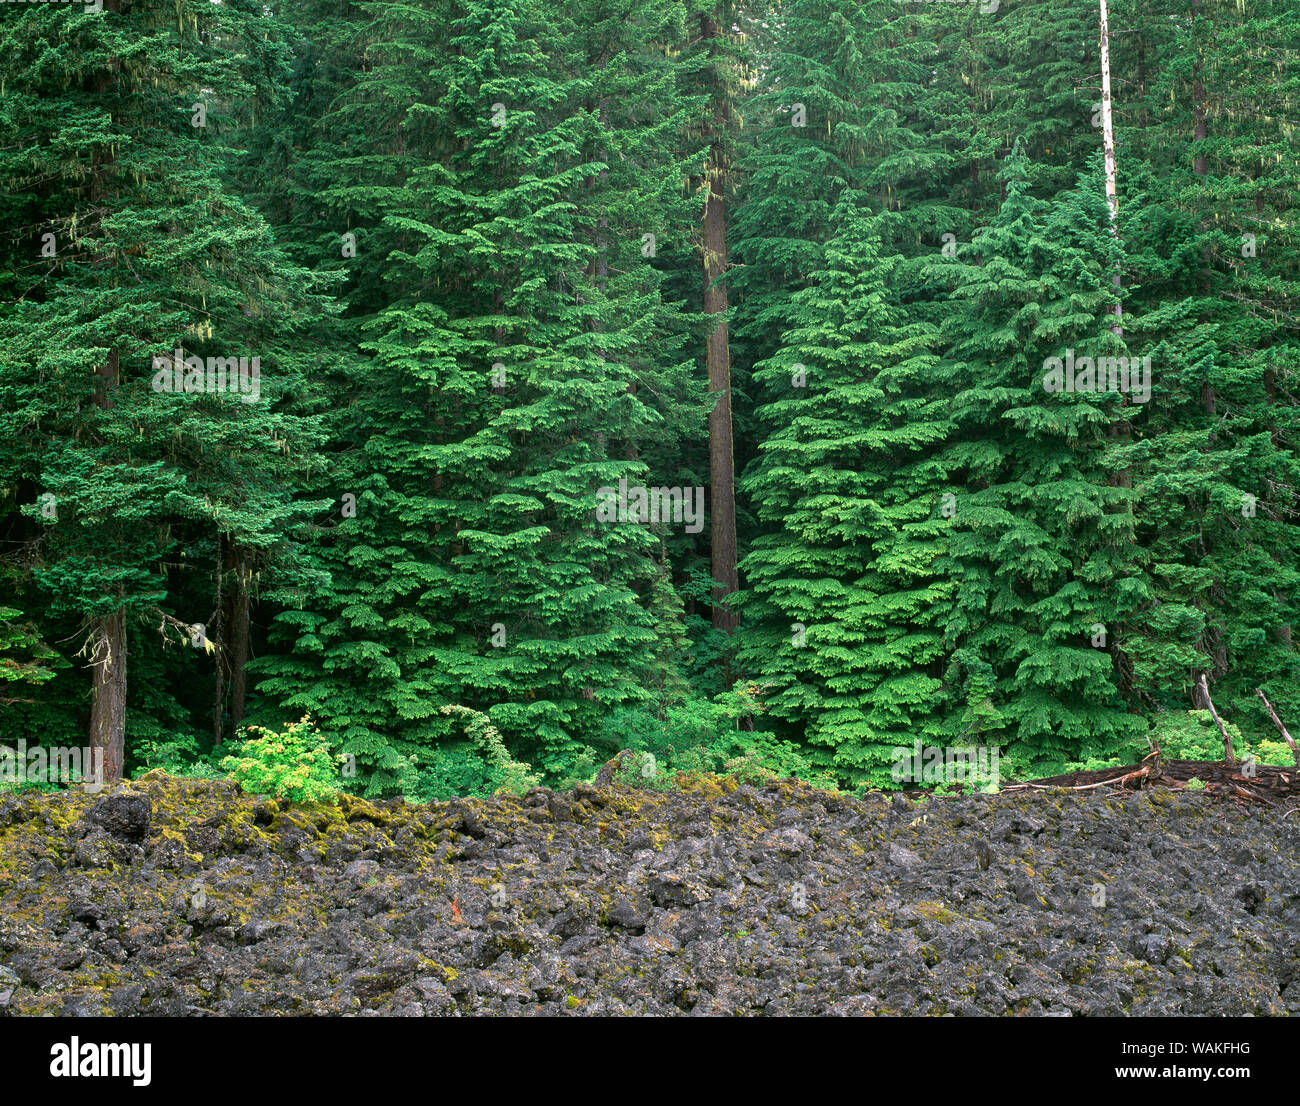 USA, Oregon. Willamette National Forest, douglas fir and western hemlock trees grow alongside margin of old lava flow. Stock Photo